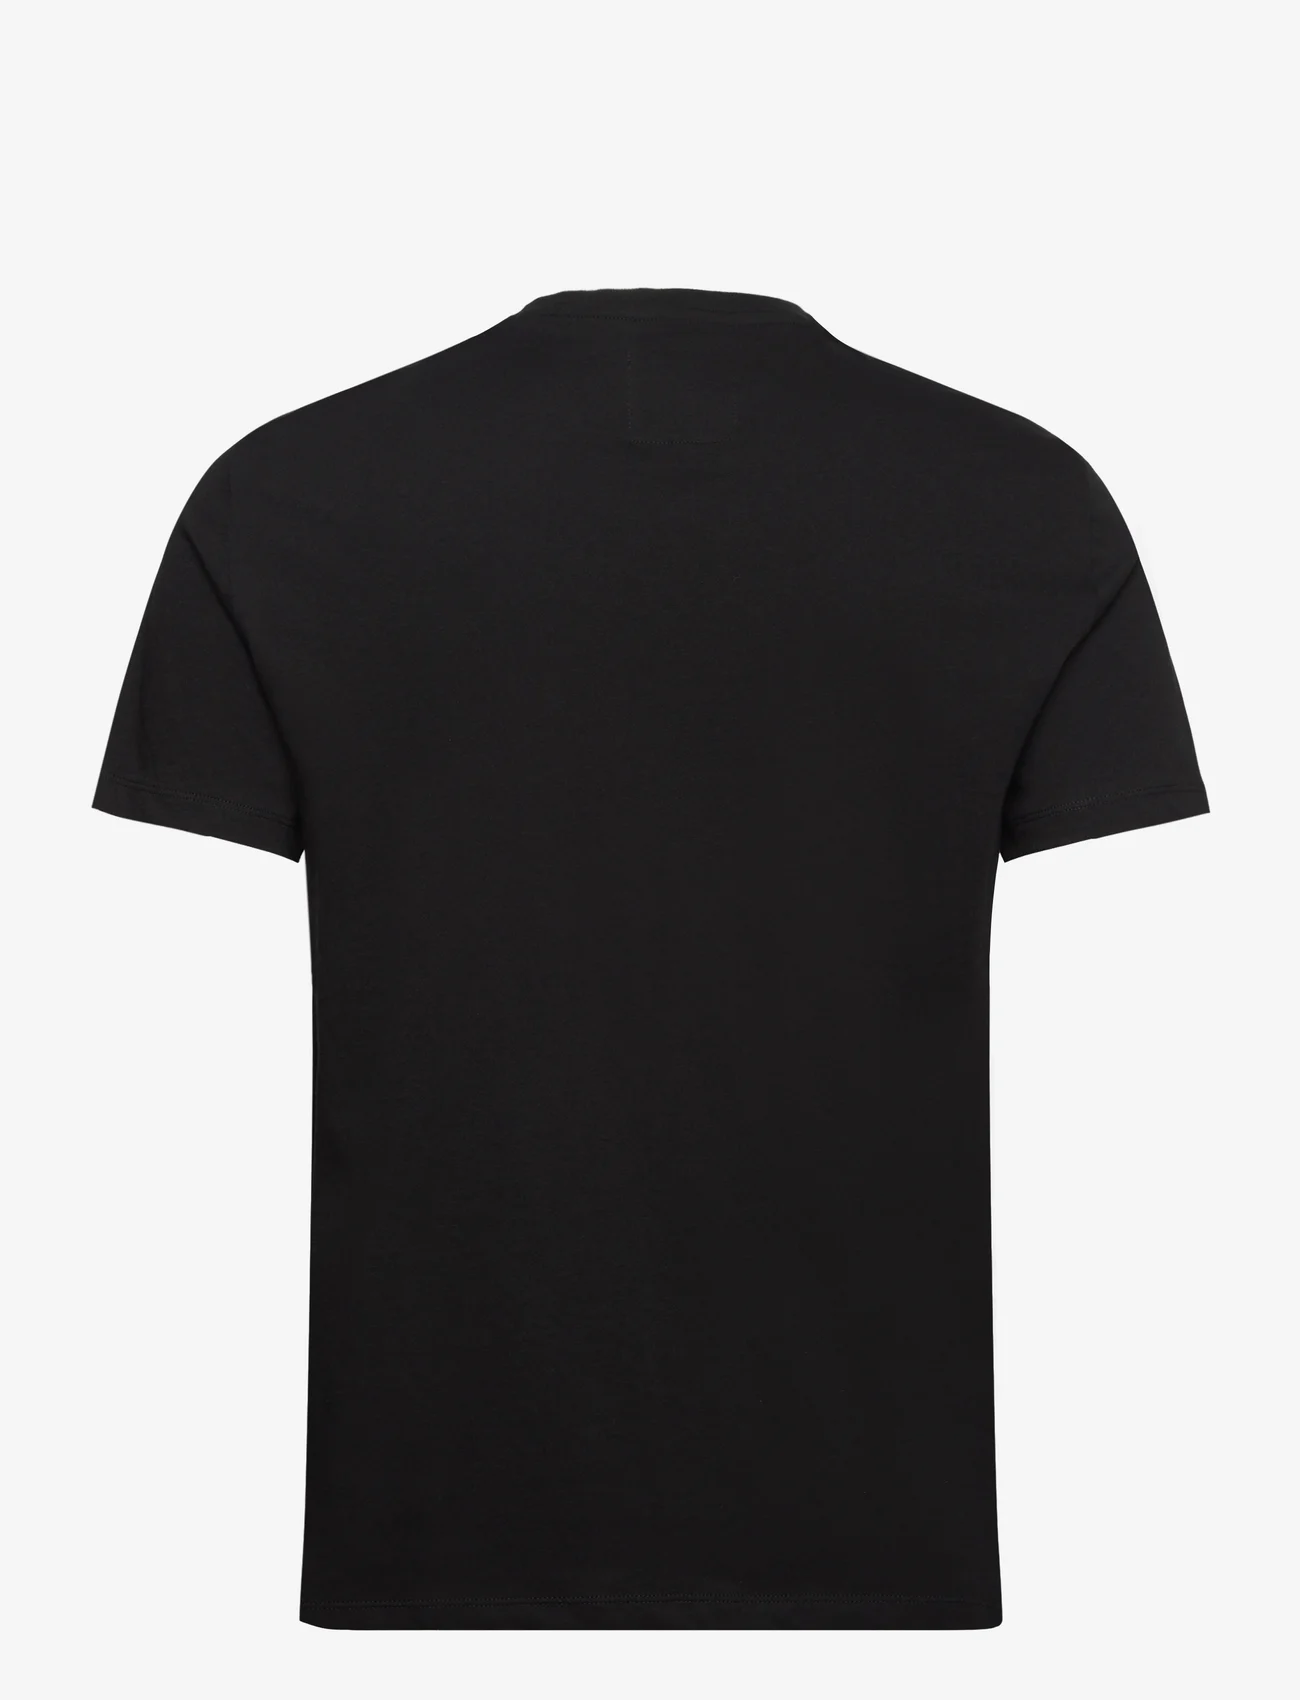 Armani Exchange - T-SHIRT - kortærmede t-shirts - 1200-black - 1